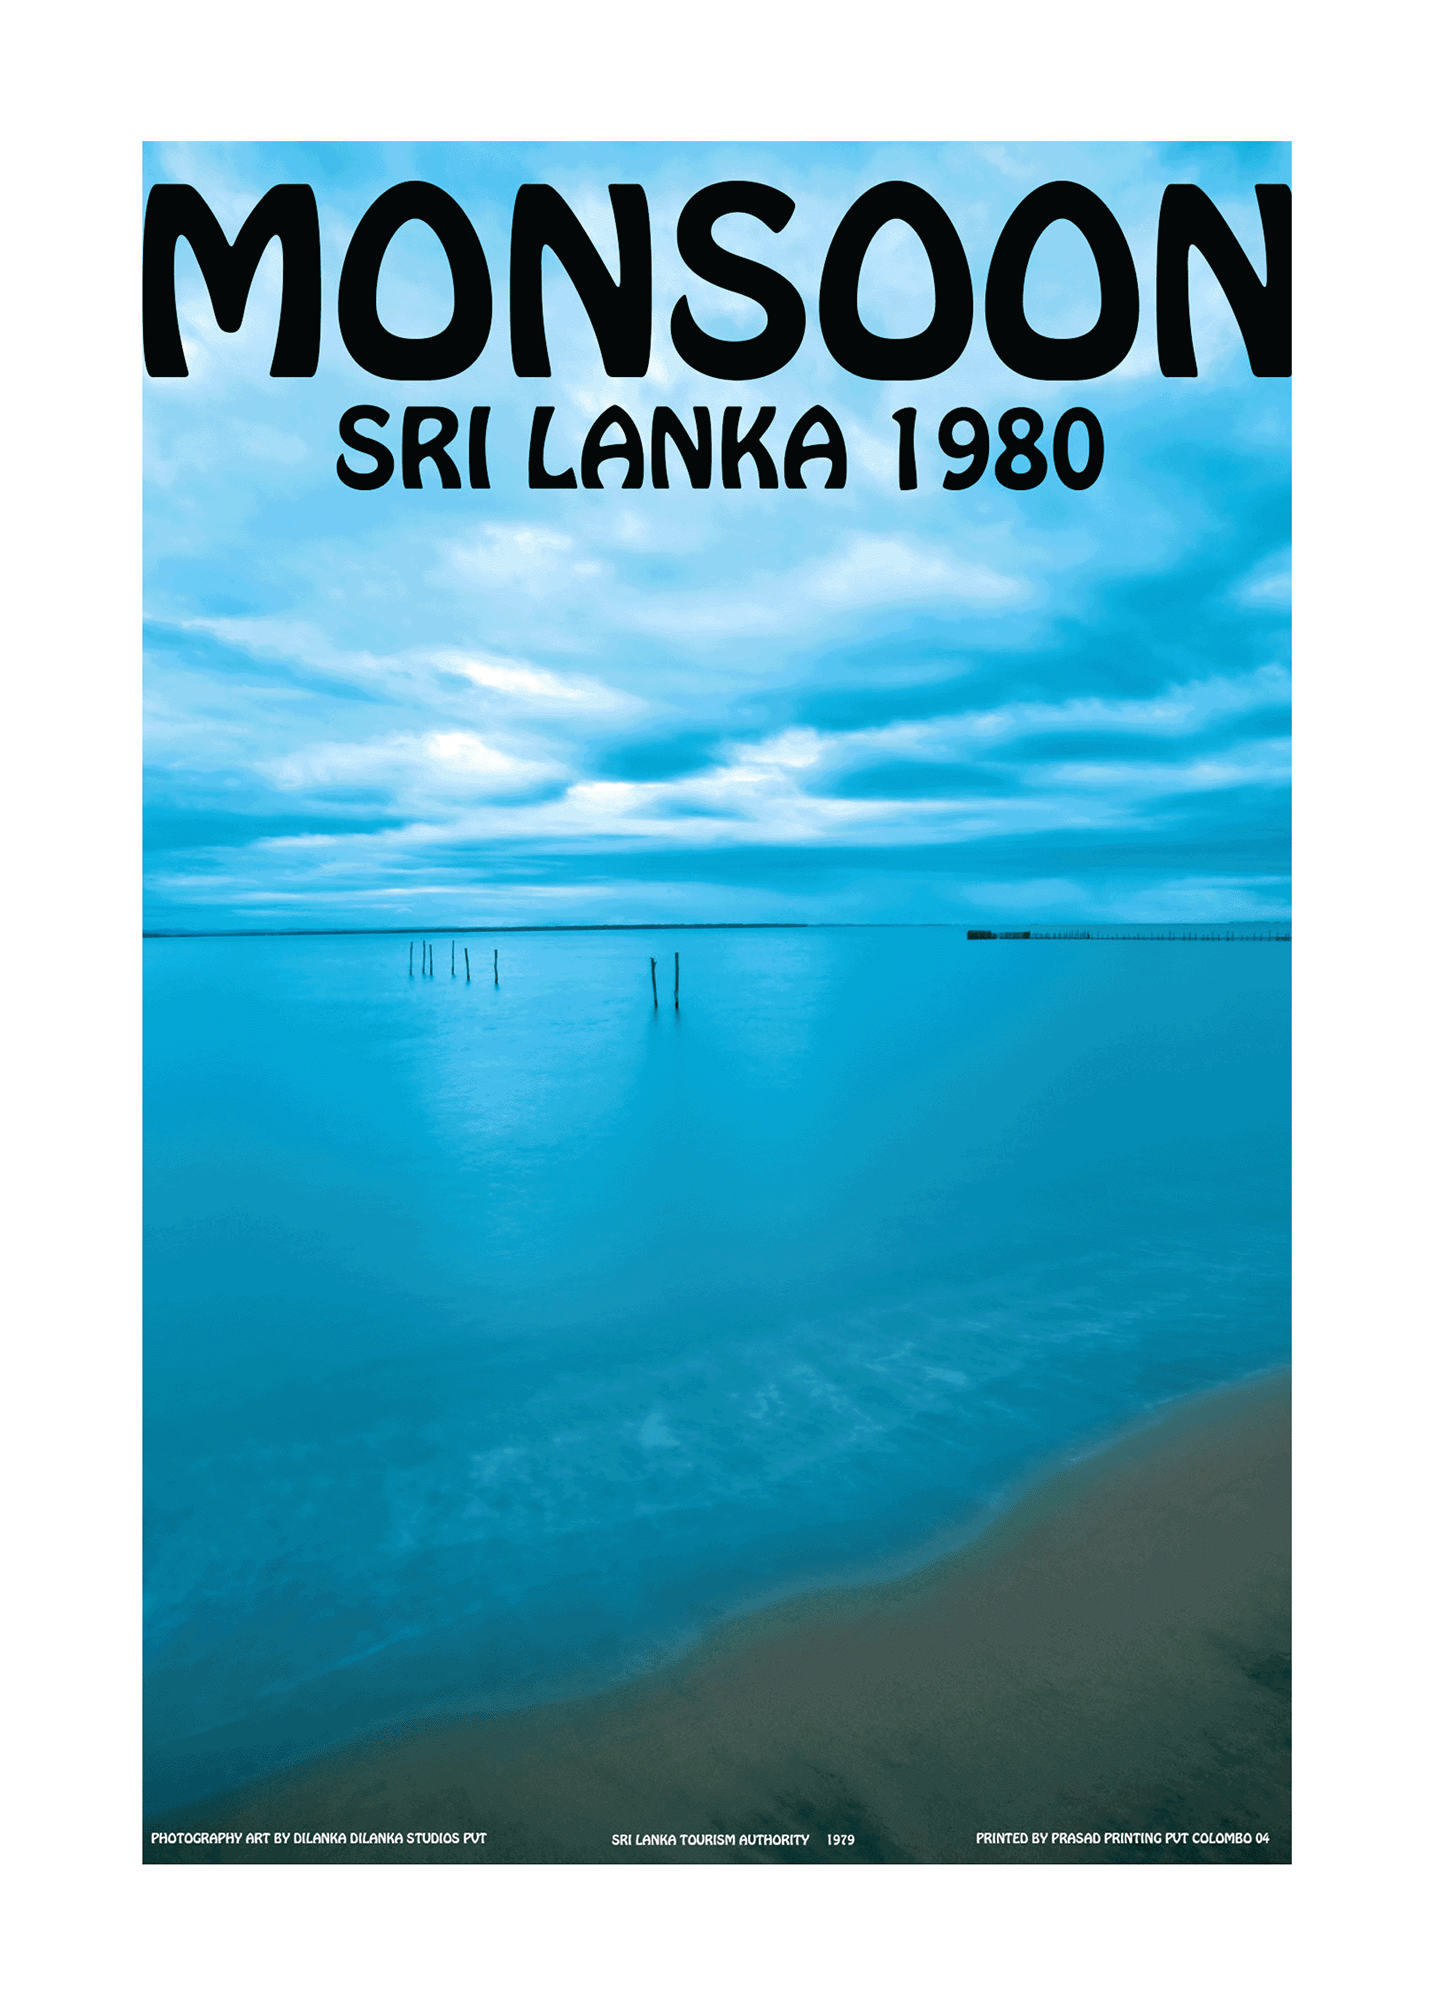 Monsoon, Sri Lanka, 1980s.